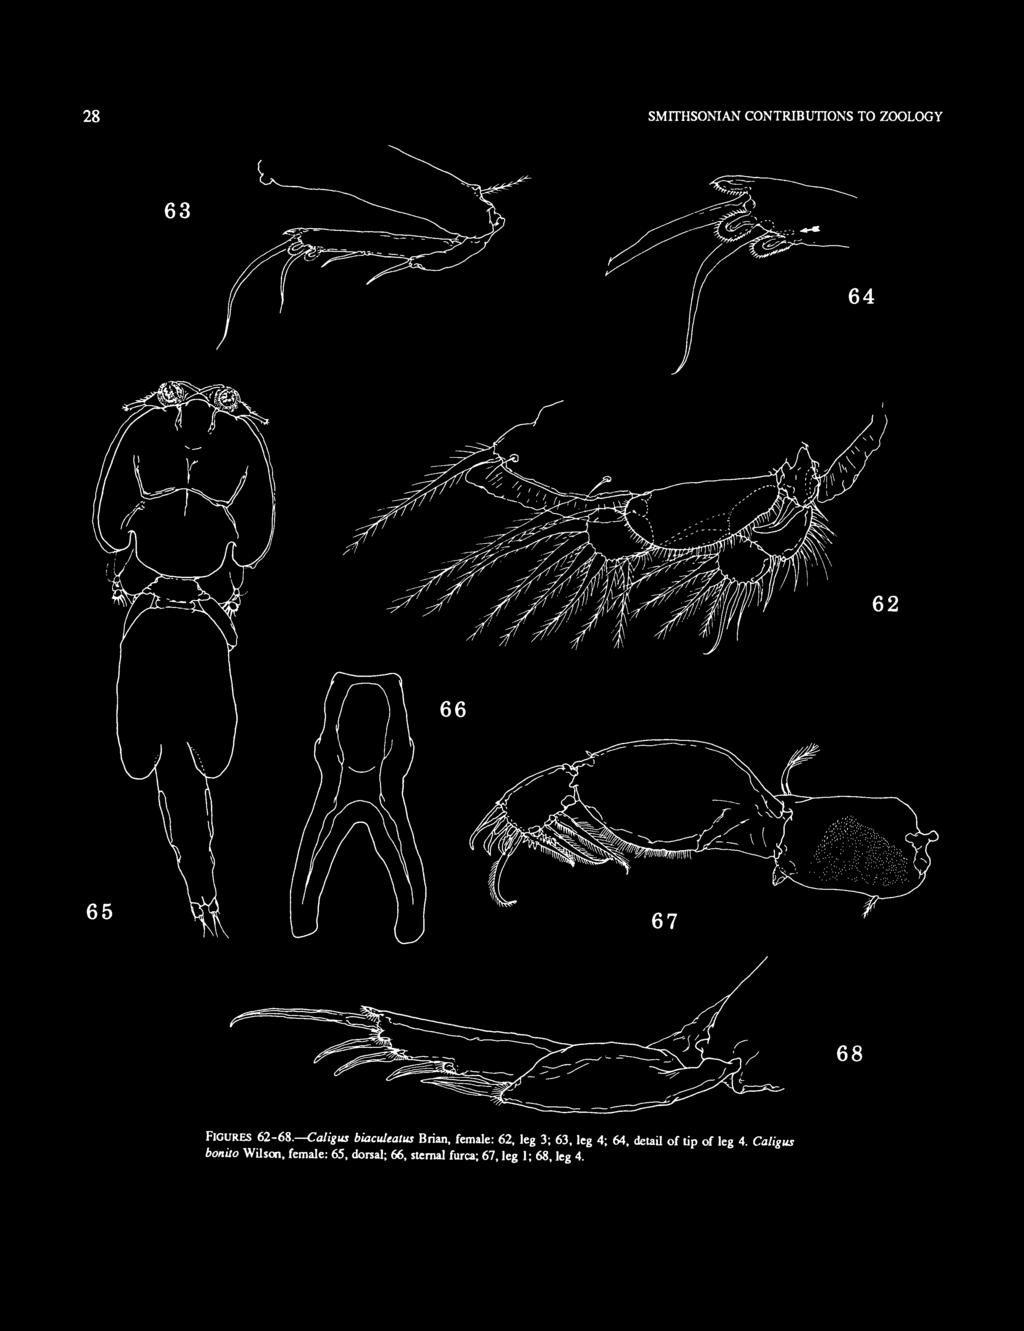 Caligus biaculeatus Brian, female: 62, leg 3; 63, leg 4;